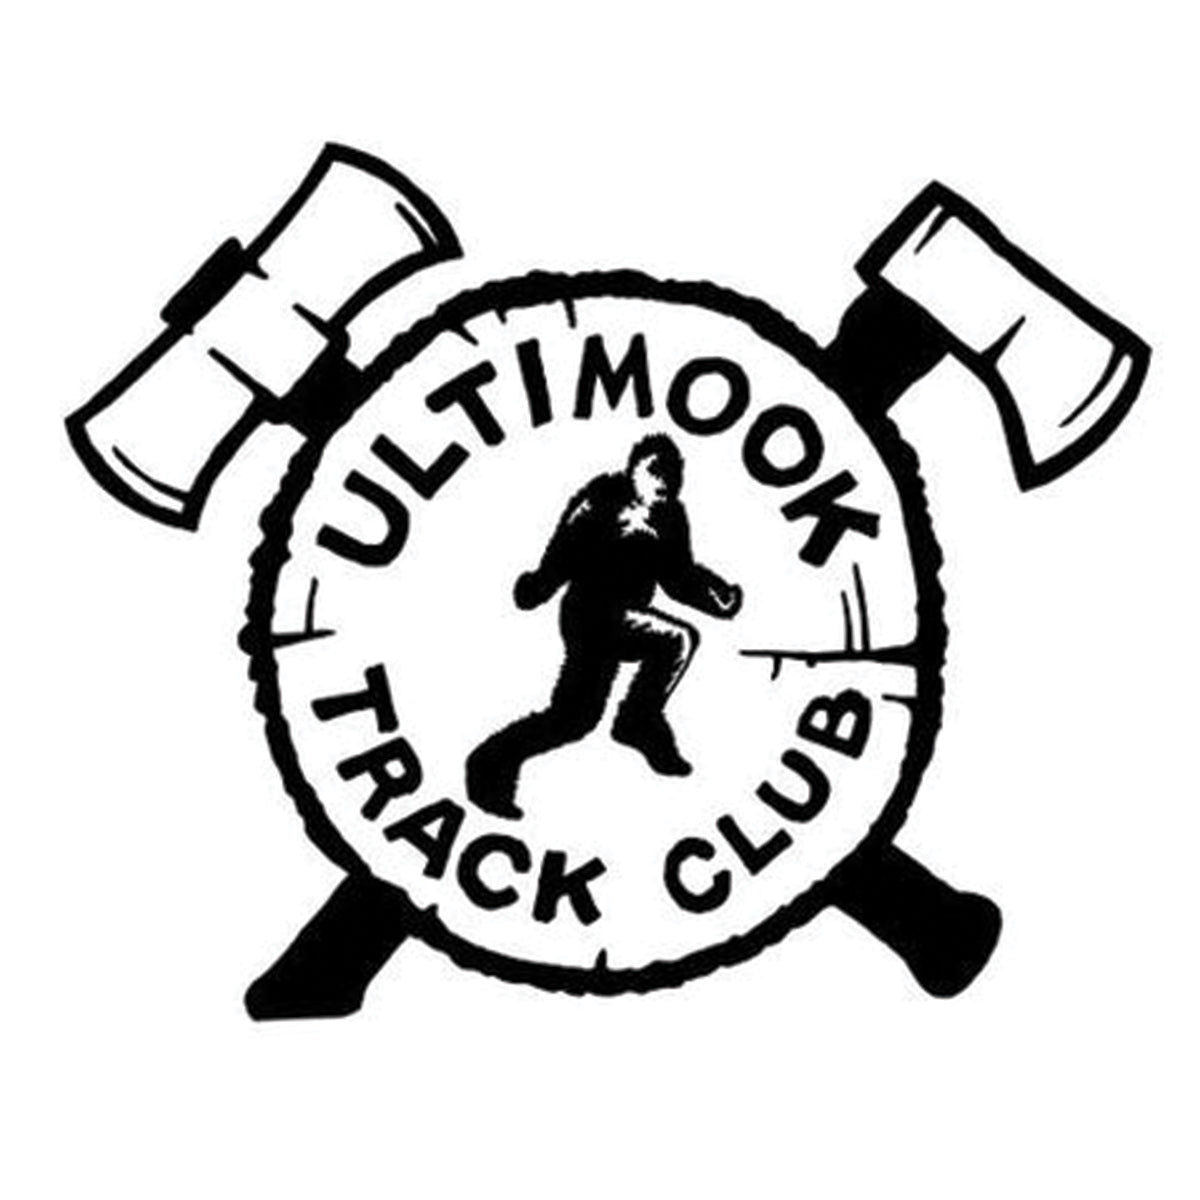 Ultimook Track Club